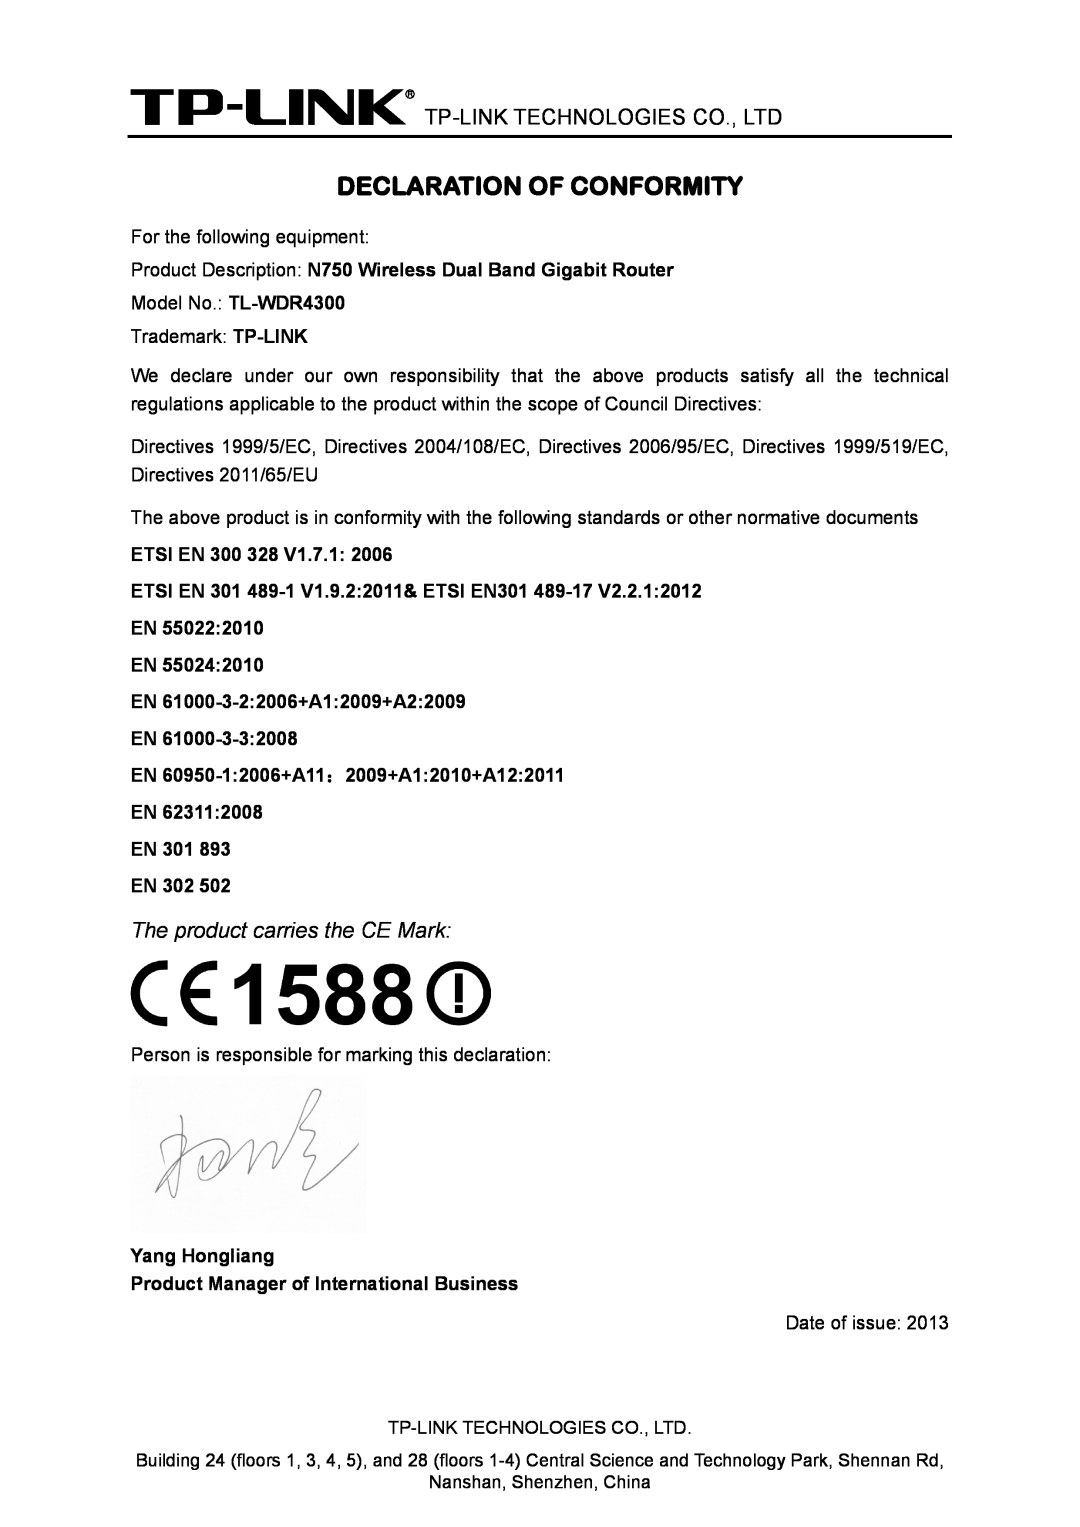 TP-Link TL-WDR4300 Declaration Of Conformity, Product Description N750 Wireless Dual Band Gigabit Router, ETSI EN 300 328 